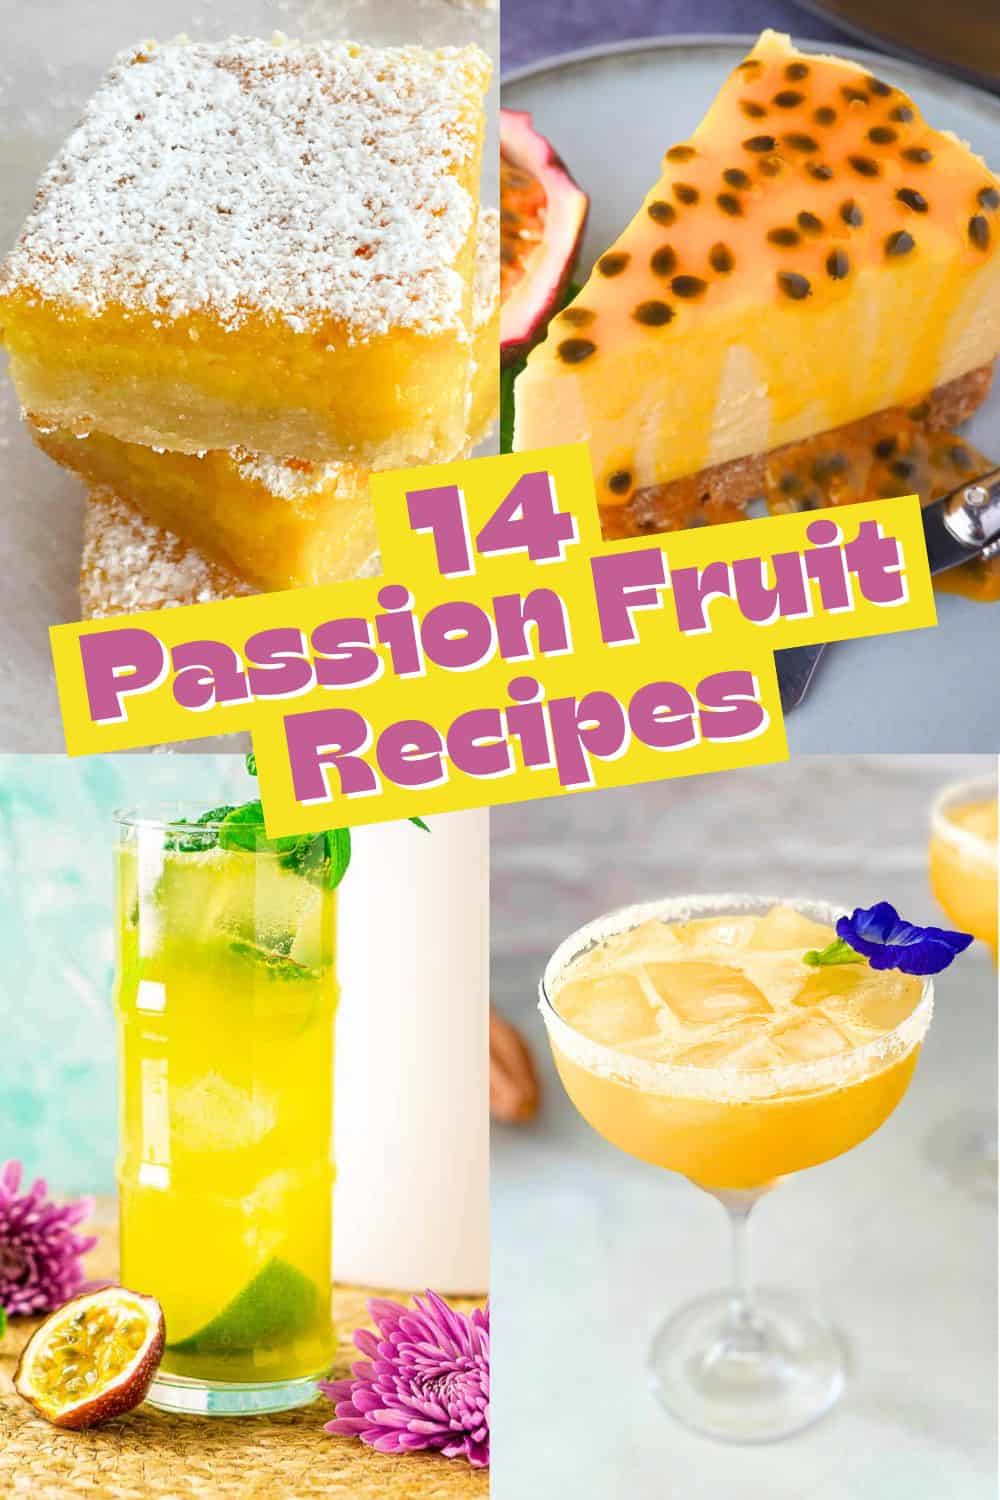 Passion Fruit Recipes